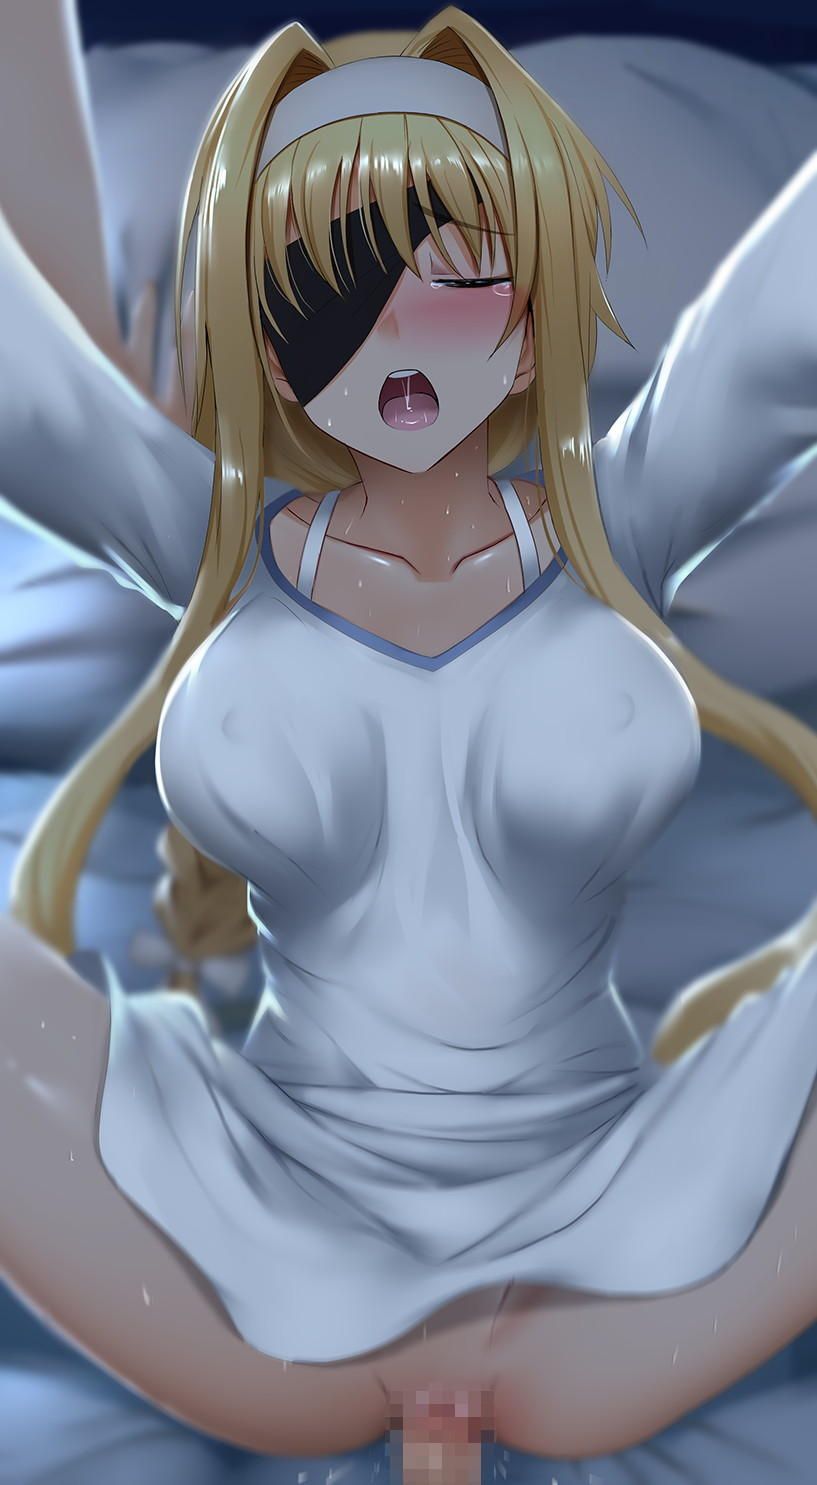 [Erotic anime summary] Sword art online Alice erotic image [secondary erotic] 19